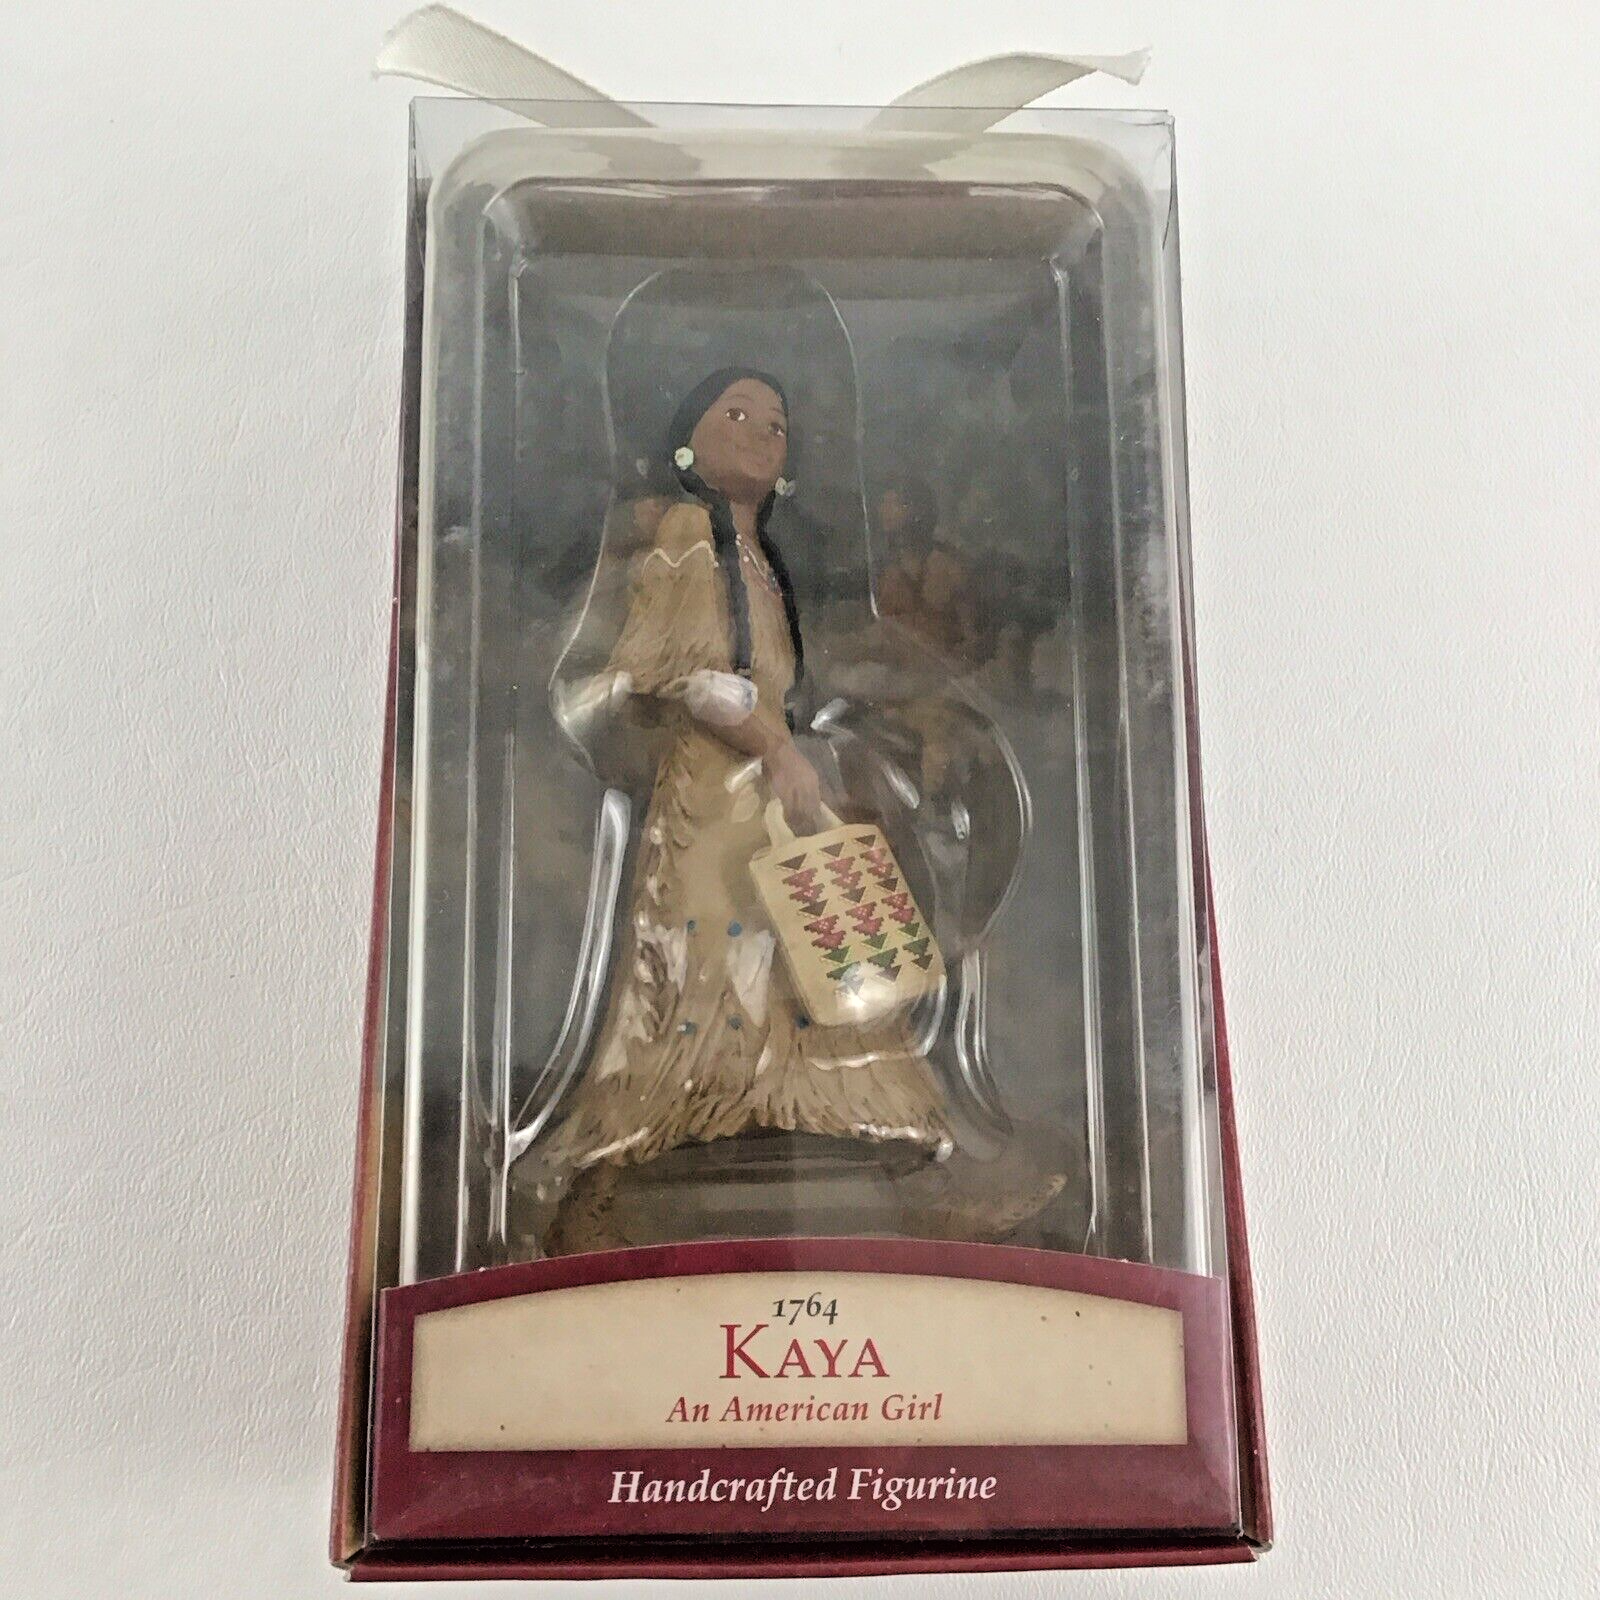 Hallmark Keepsake Handcrafted Figurine American Girl Collection 1764 Kaya 2003 - $24.70